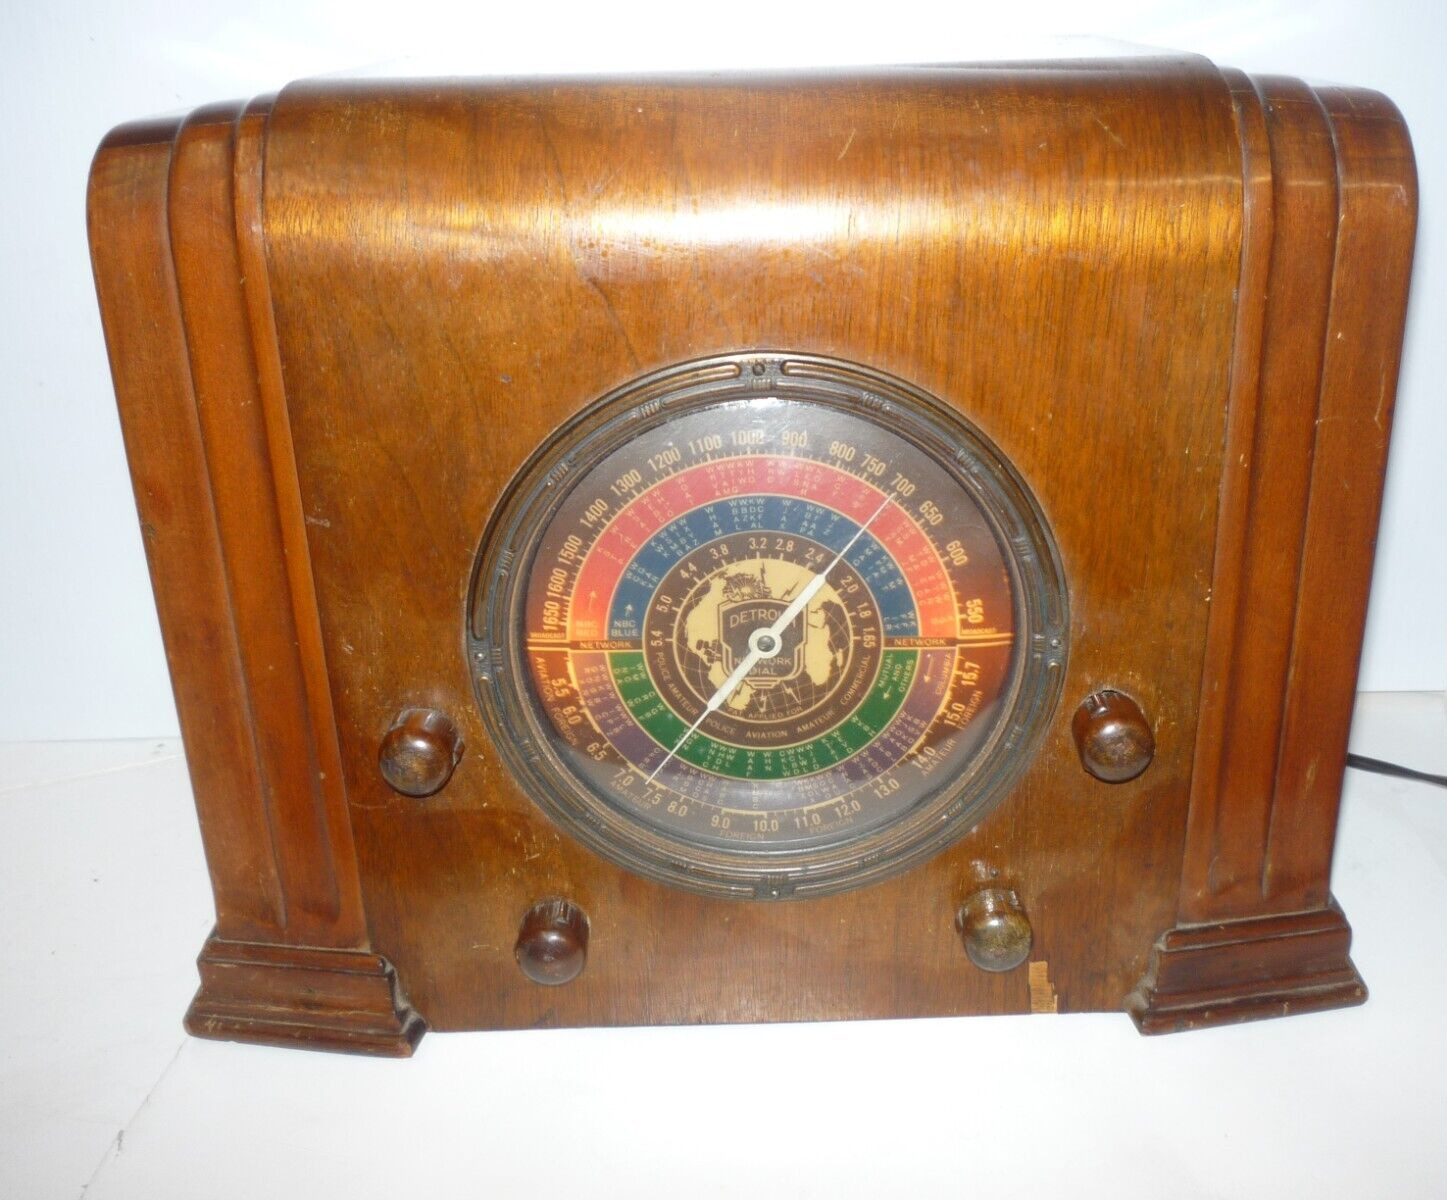 Rare Vintage Detrola tube Radio - Art Deco Model 106